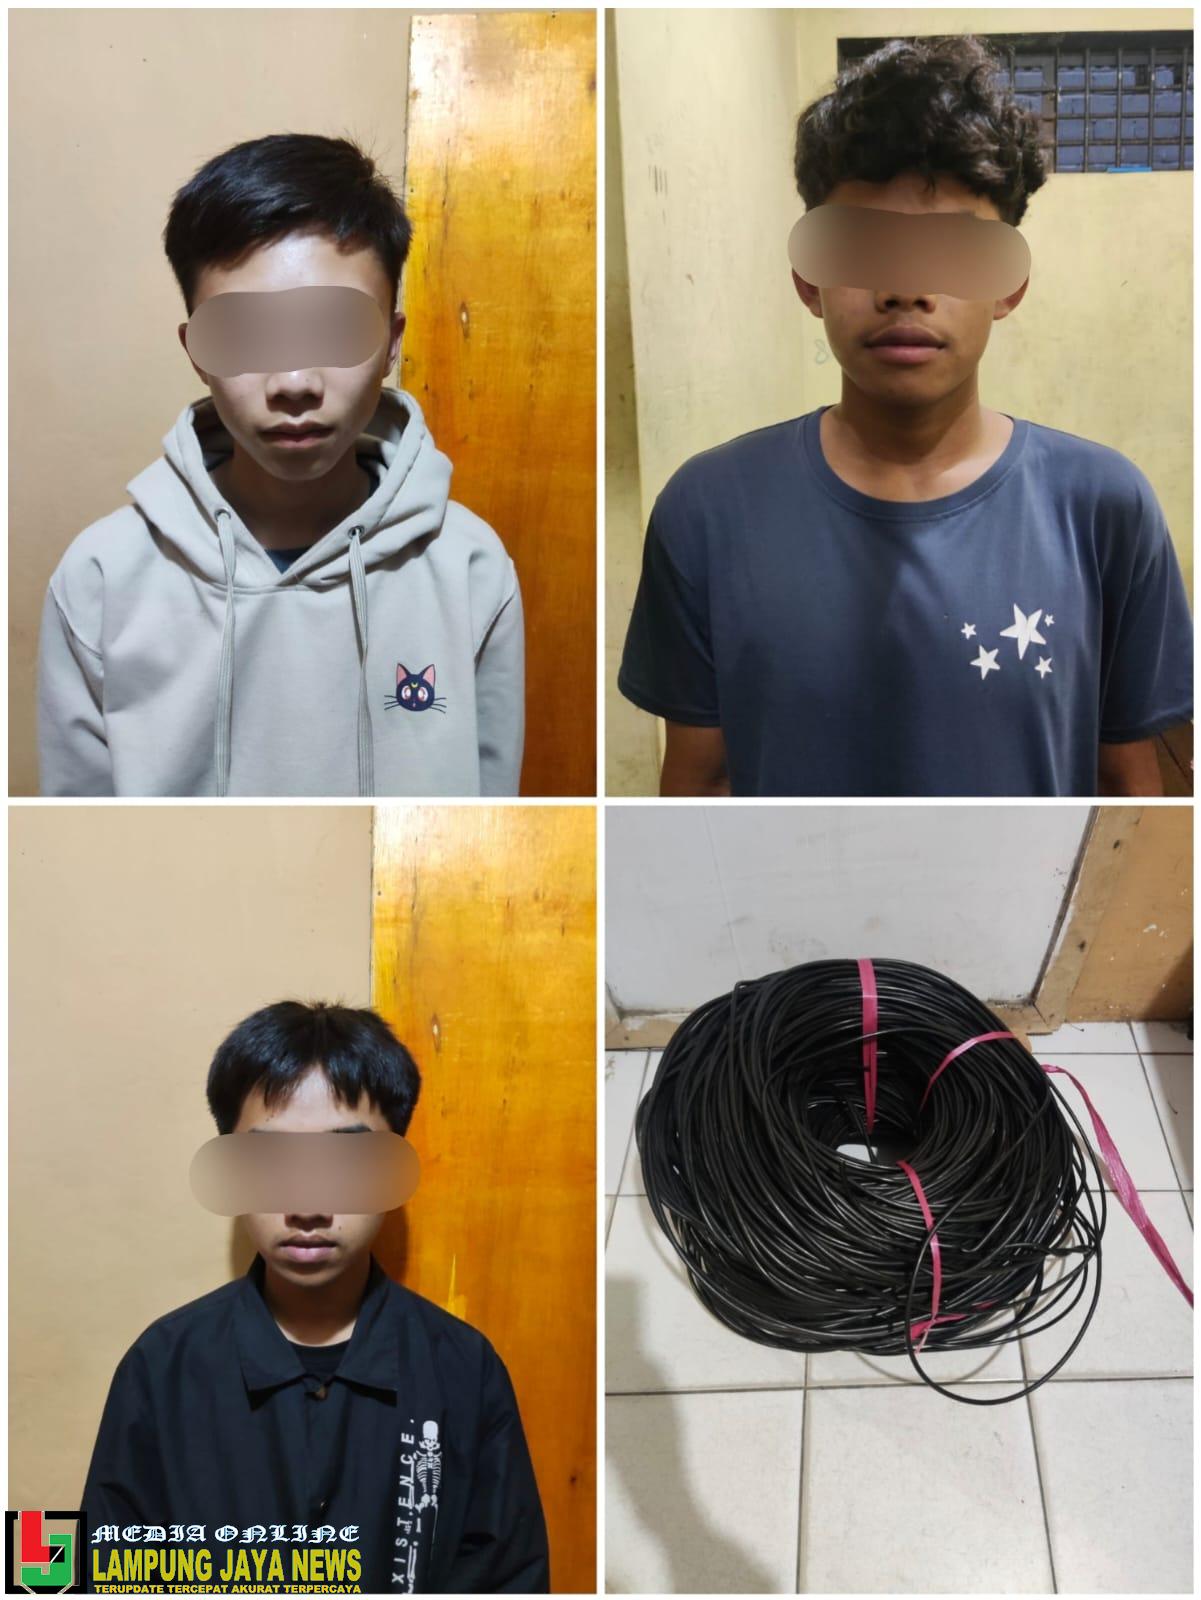 Diduga Pelaku Pencurian Kabel, Tiga Remaja Diamankan Tekab 308 Presisi Polsek Sekincau